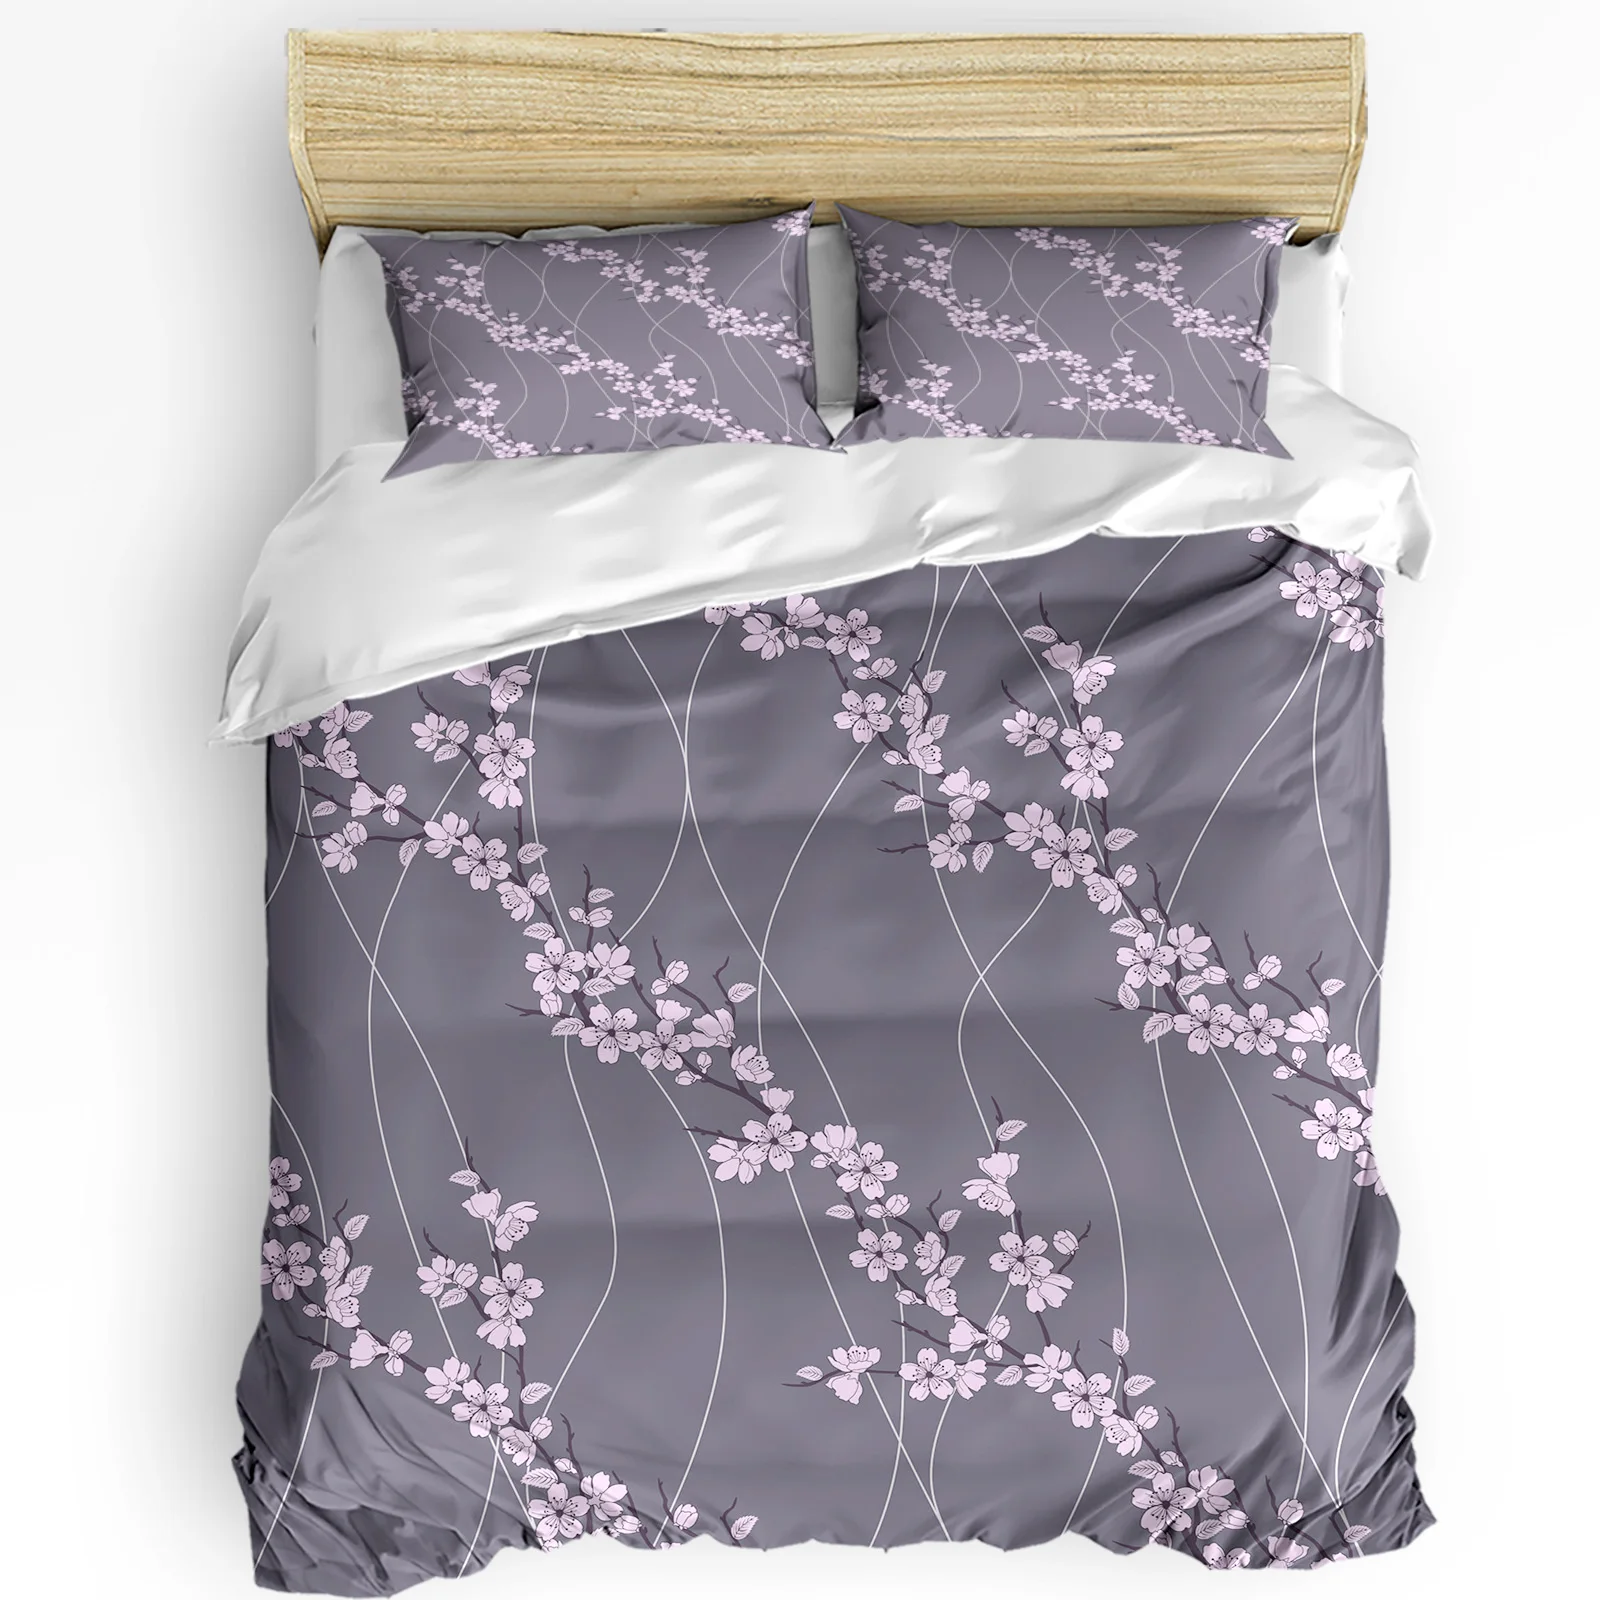 

3pcs Bedding Set Cherry Blossoms Flower Floral Home Textile Duvet Cover Pillow Case Boy Kid Teen Girl Bedding Covers Set